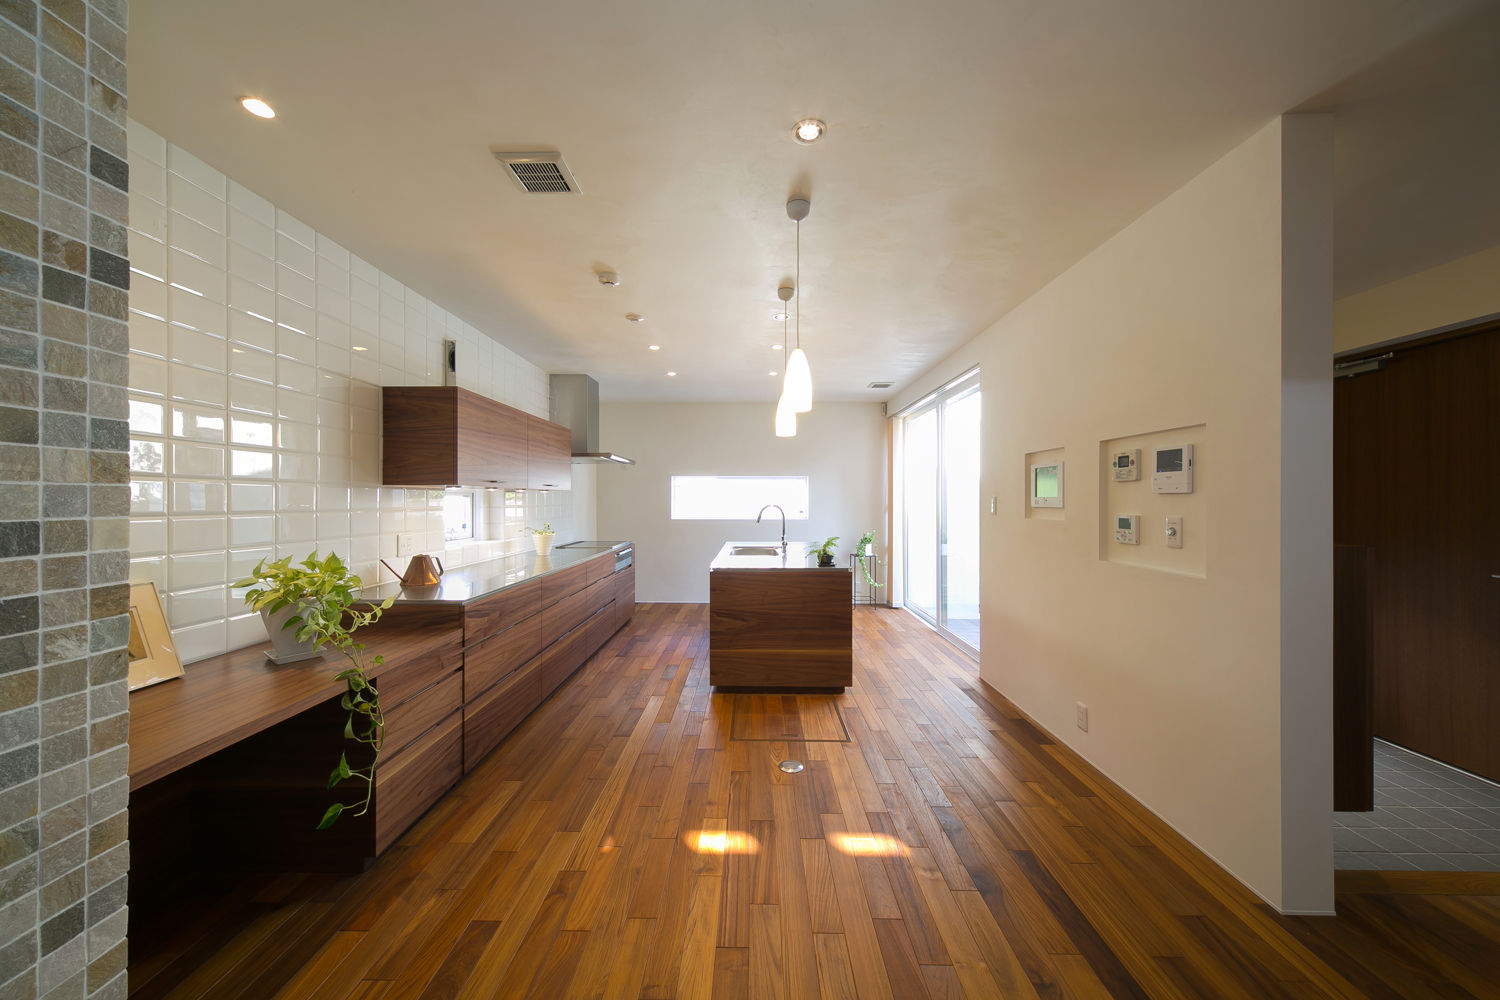 sunny side, アーキシップス京都 アーキシップス京都 Modern kitchen Wood Wood effect